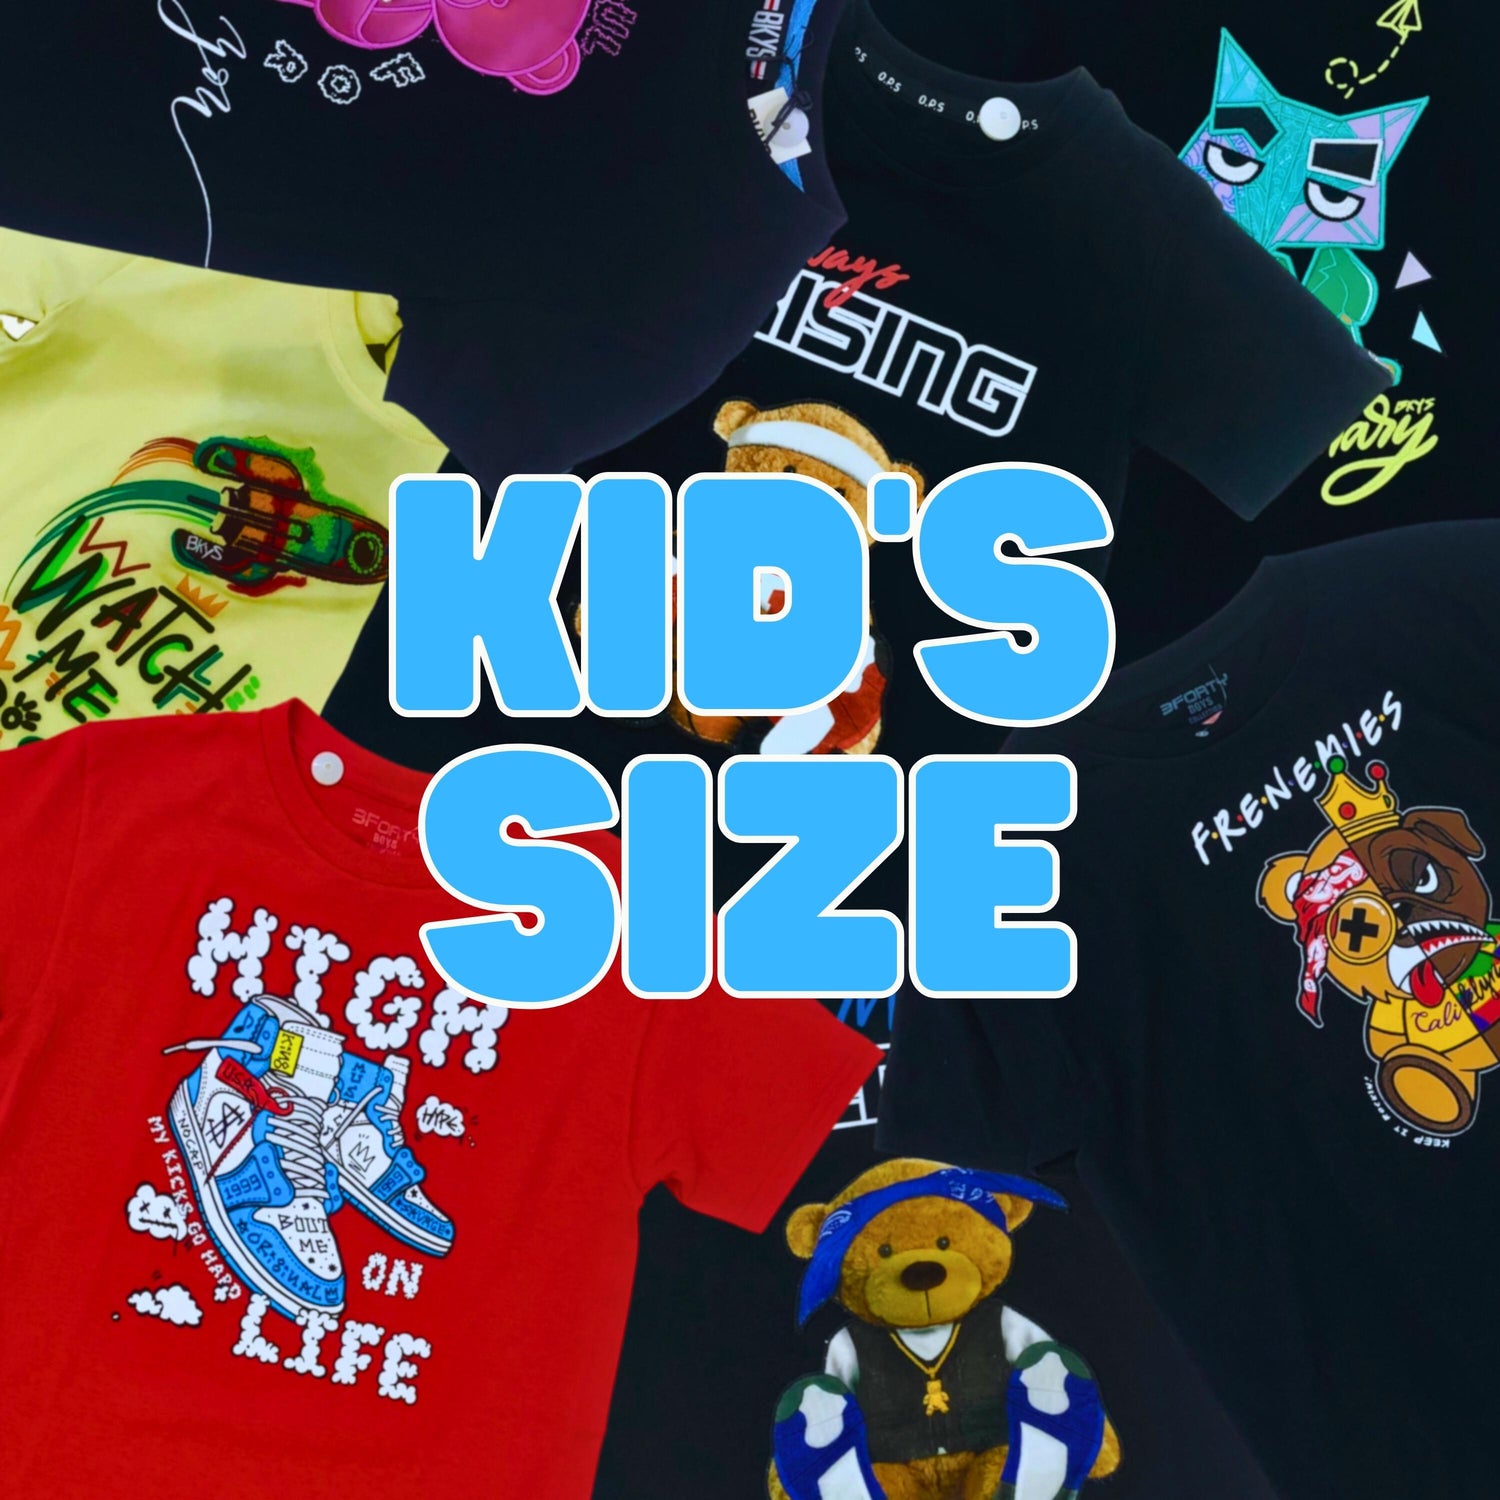 Kid’s Clothing